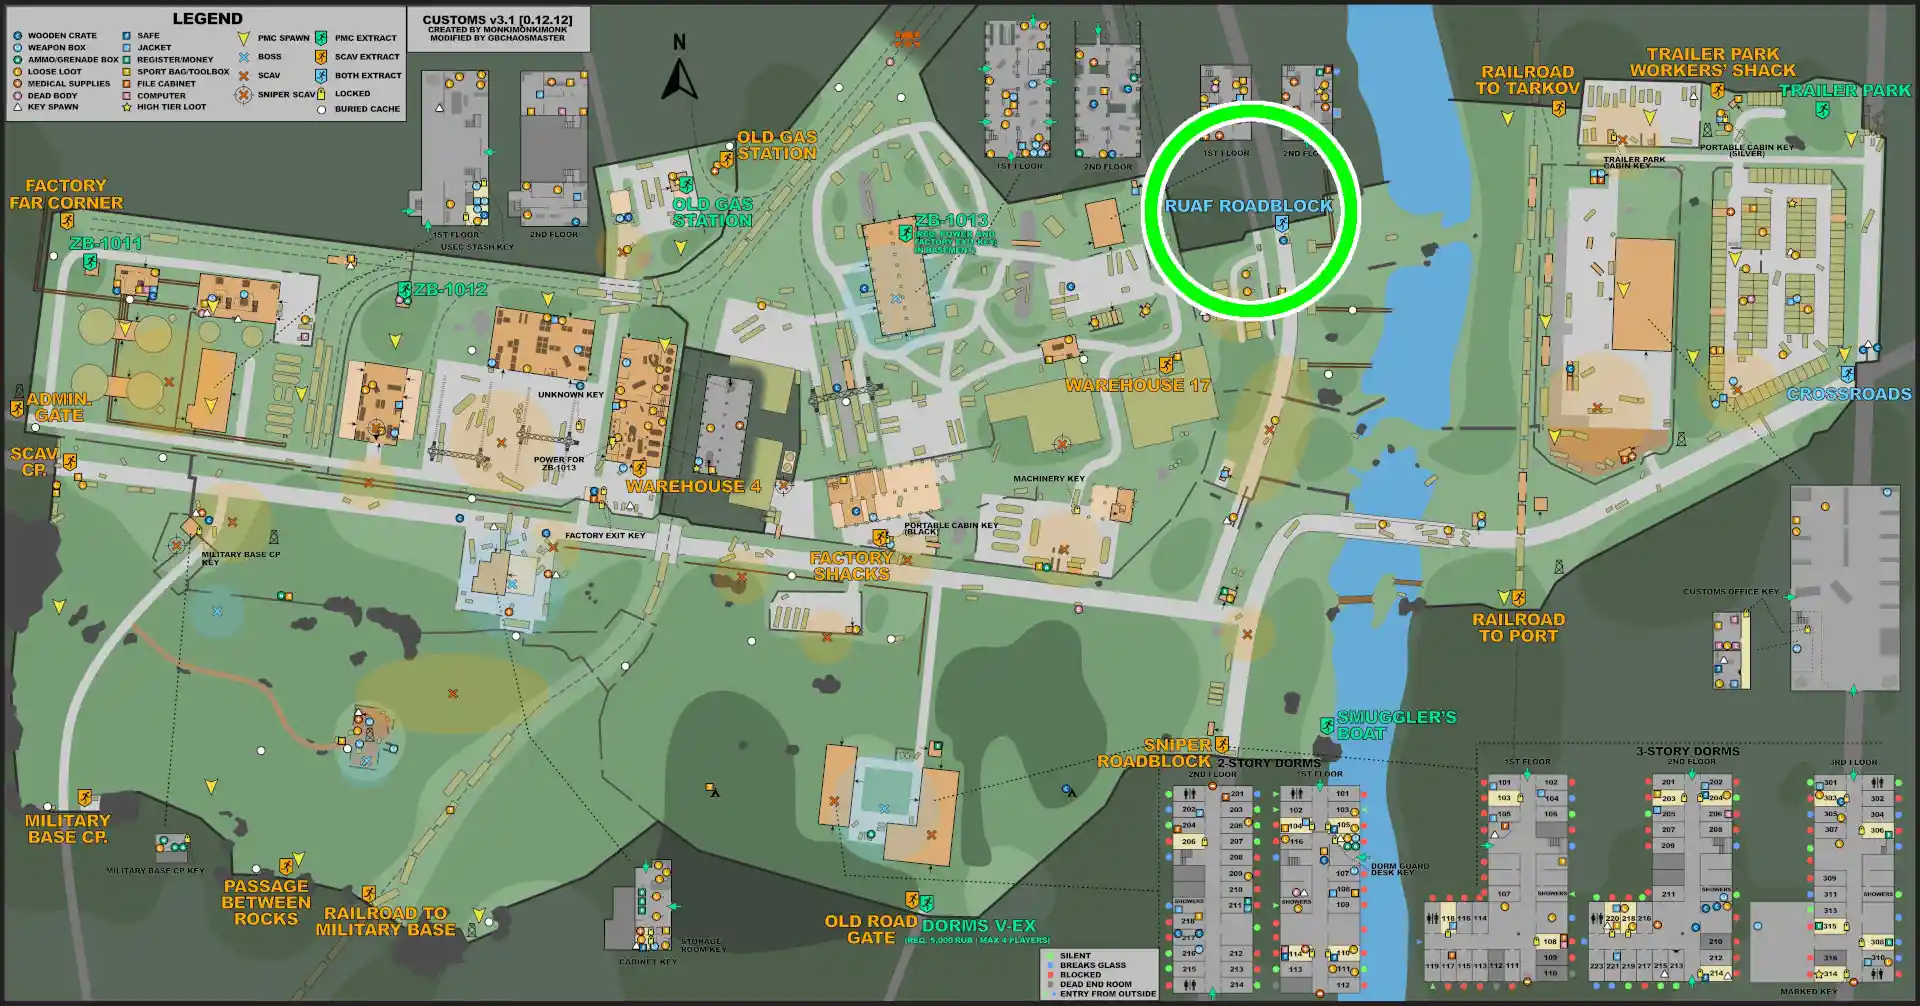 CUSTOMS-ESC-RUAF_Roadblock-MAP.jpg